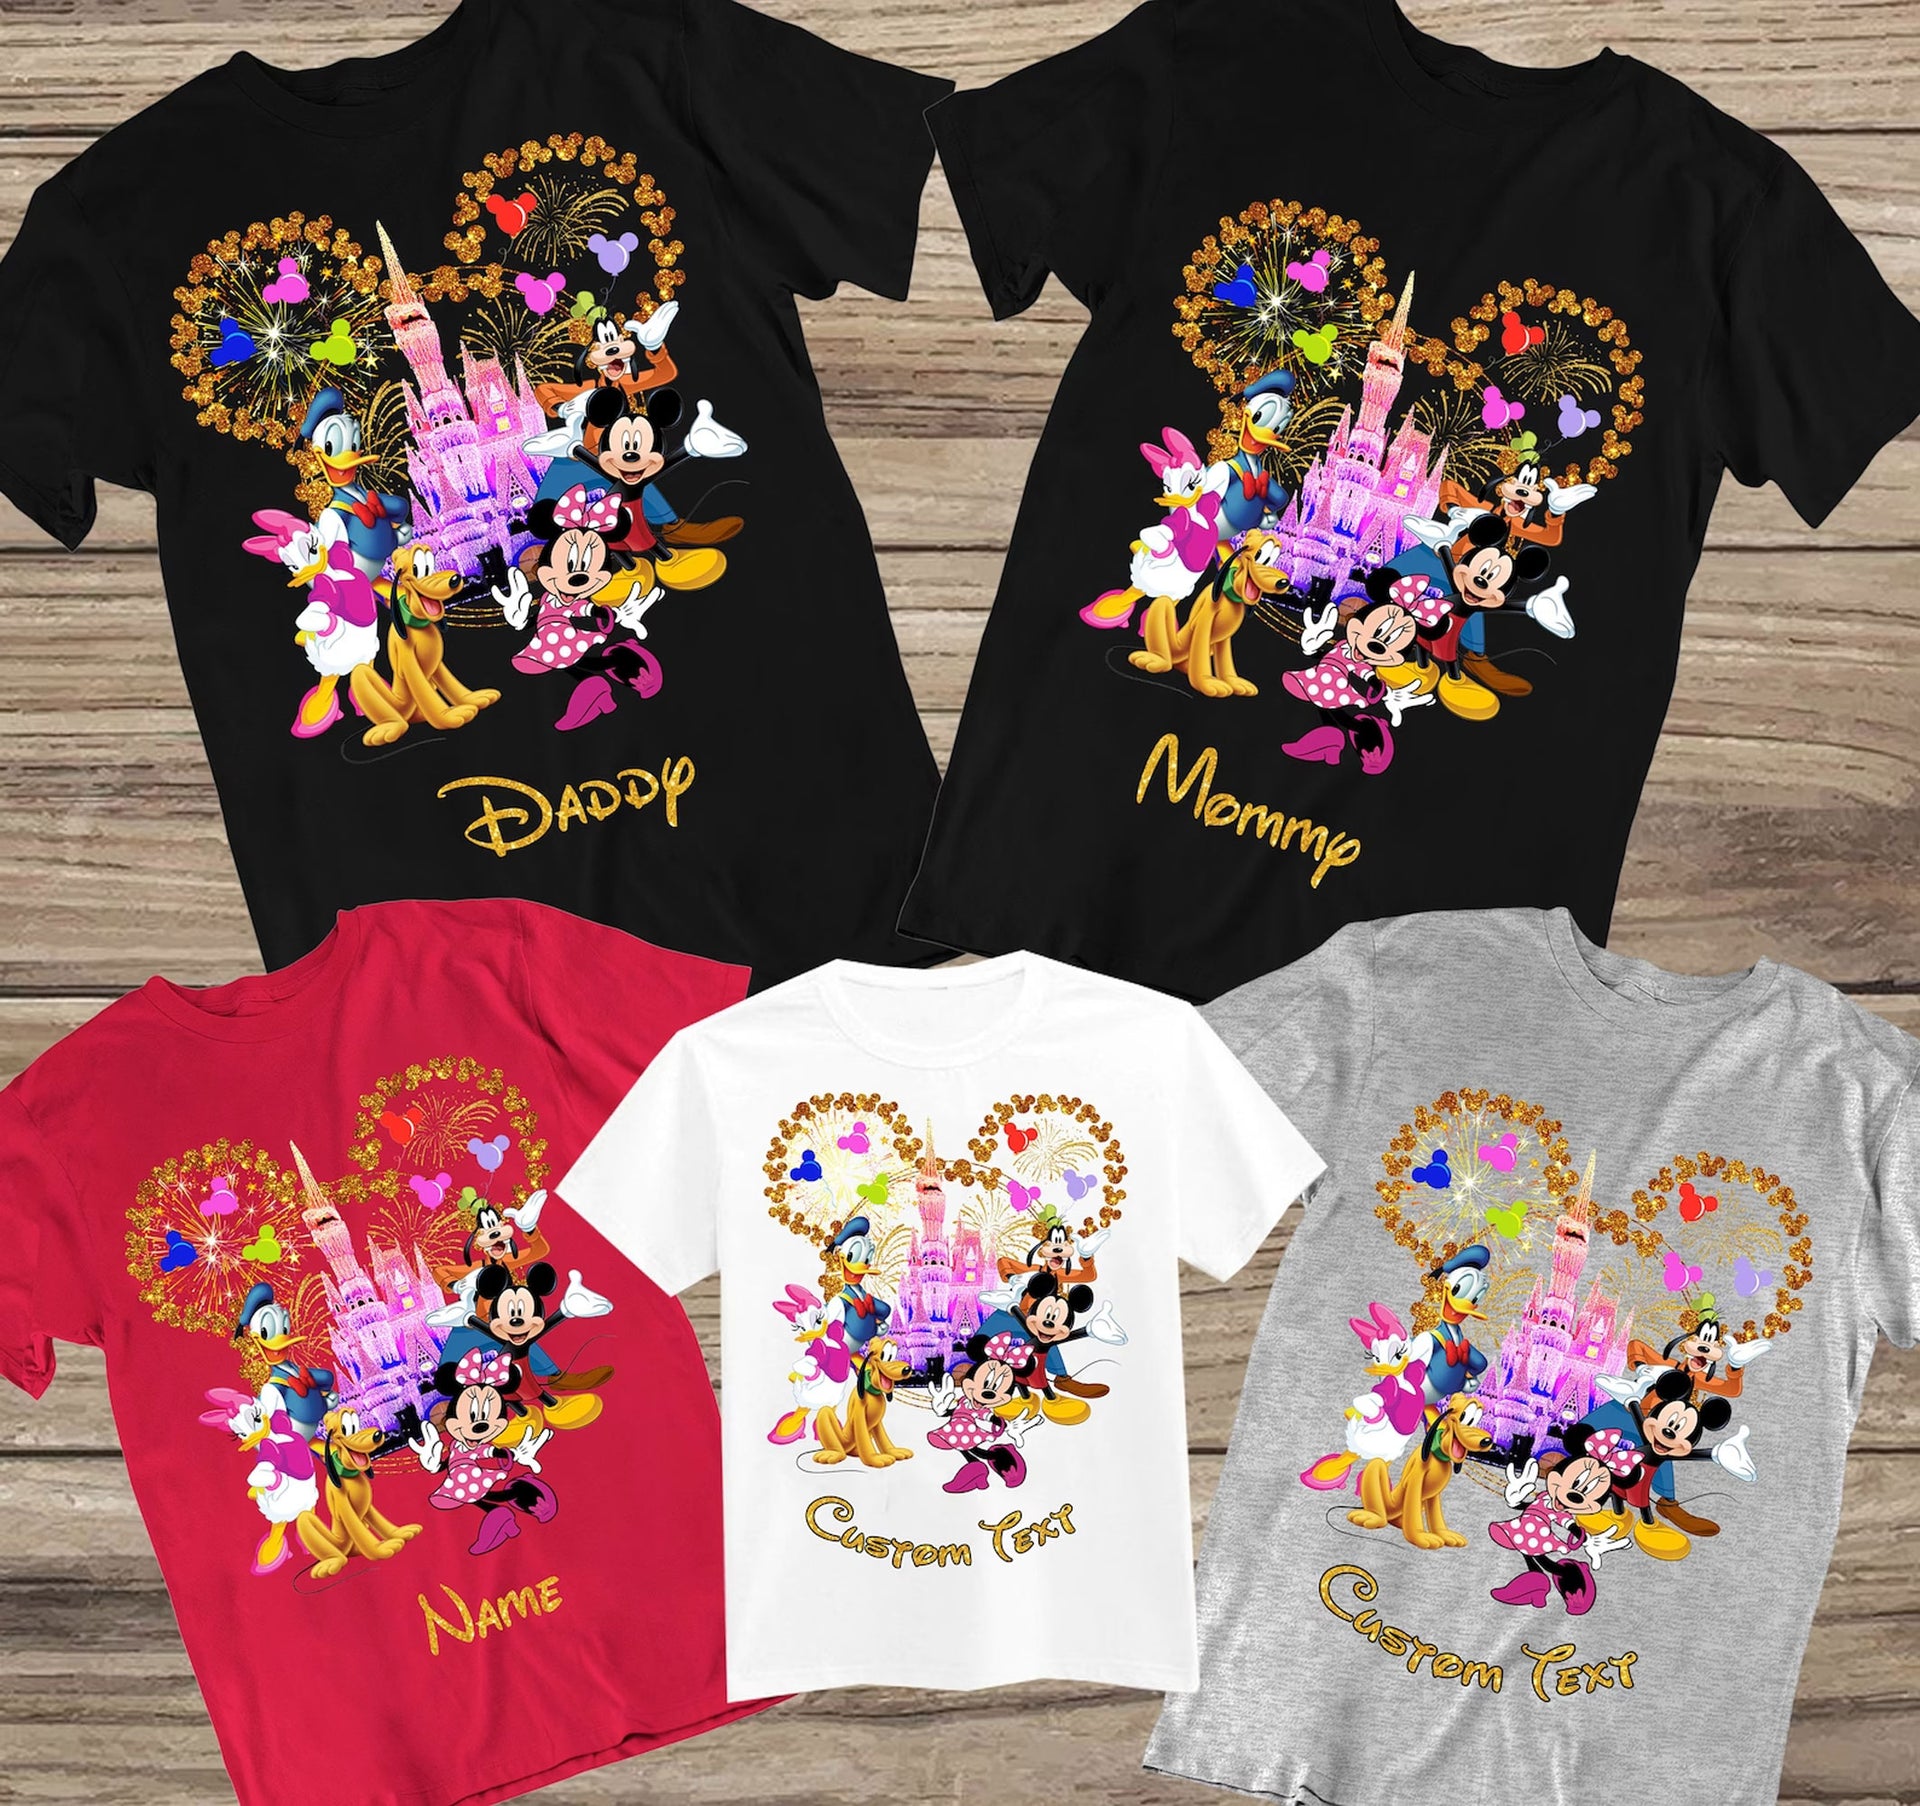 Disney World Vacation T Shirts – mouse secrets